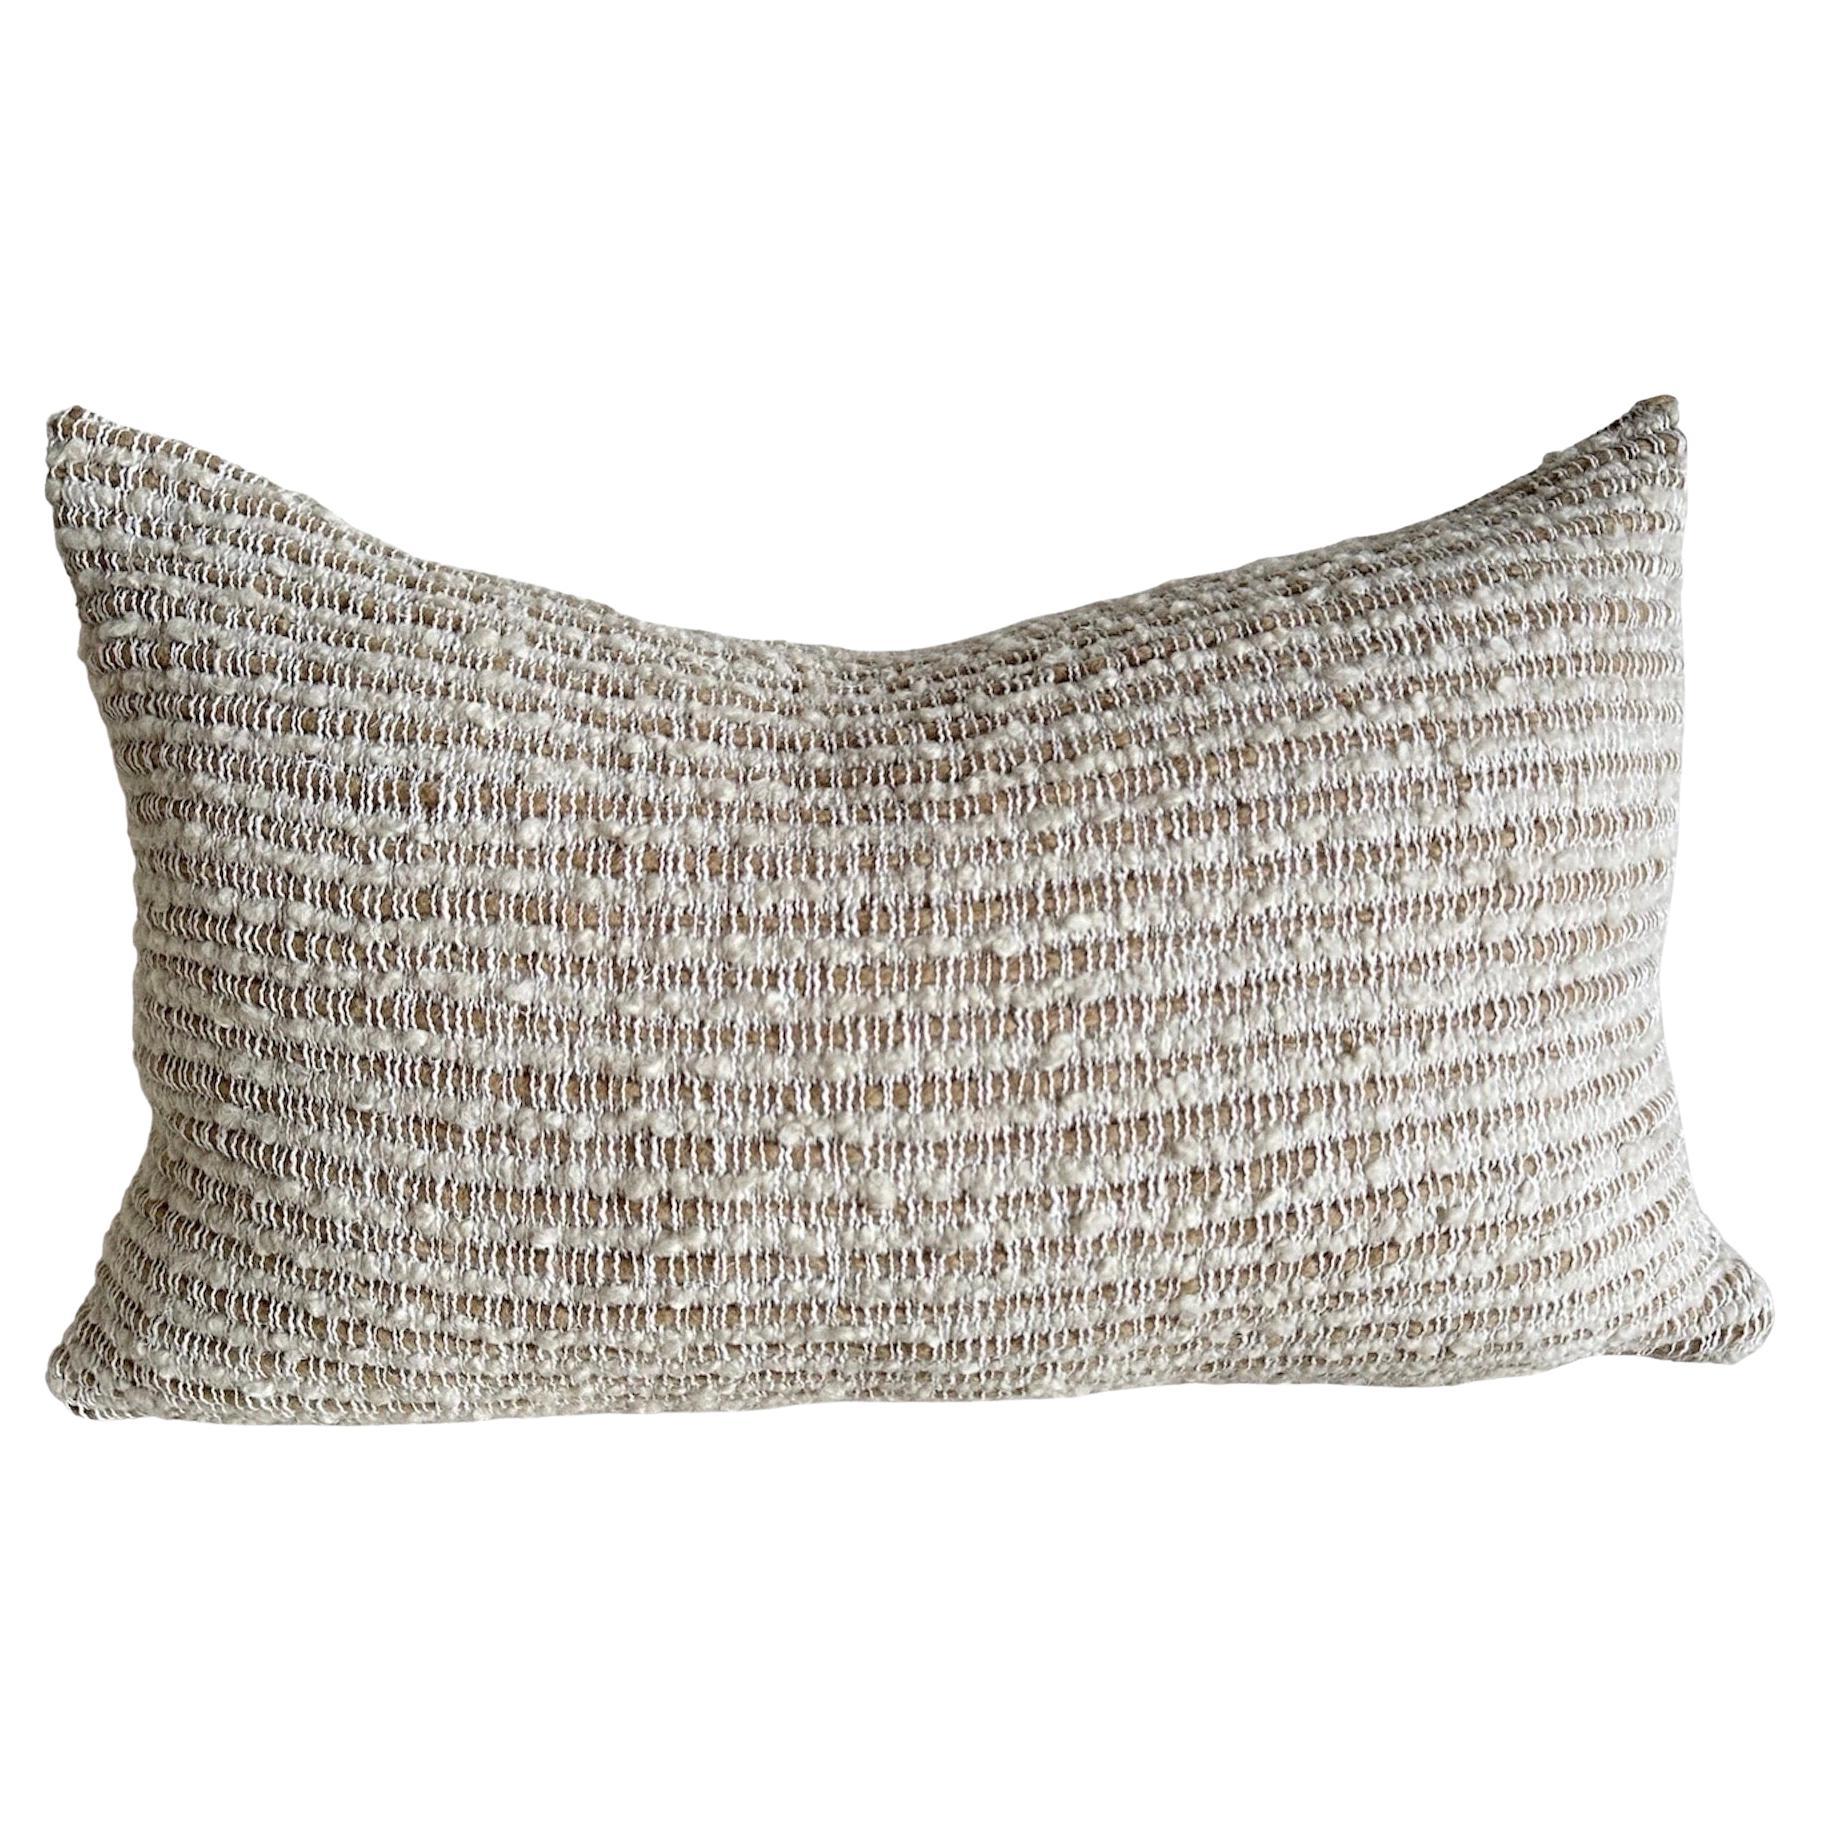 Textured Wool and Linen Lumbar Pillow For Sale